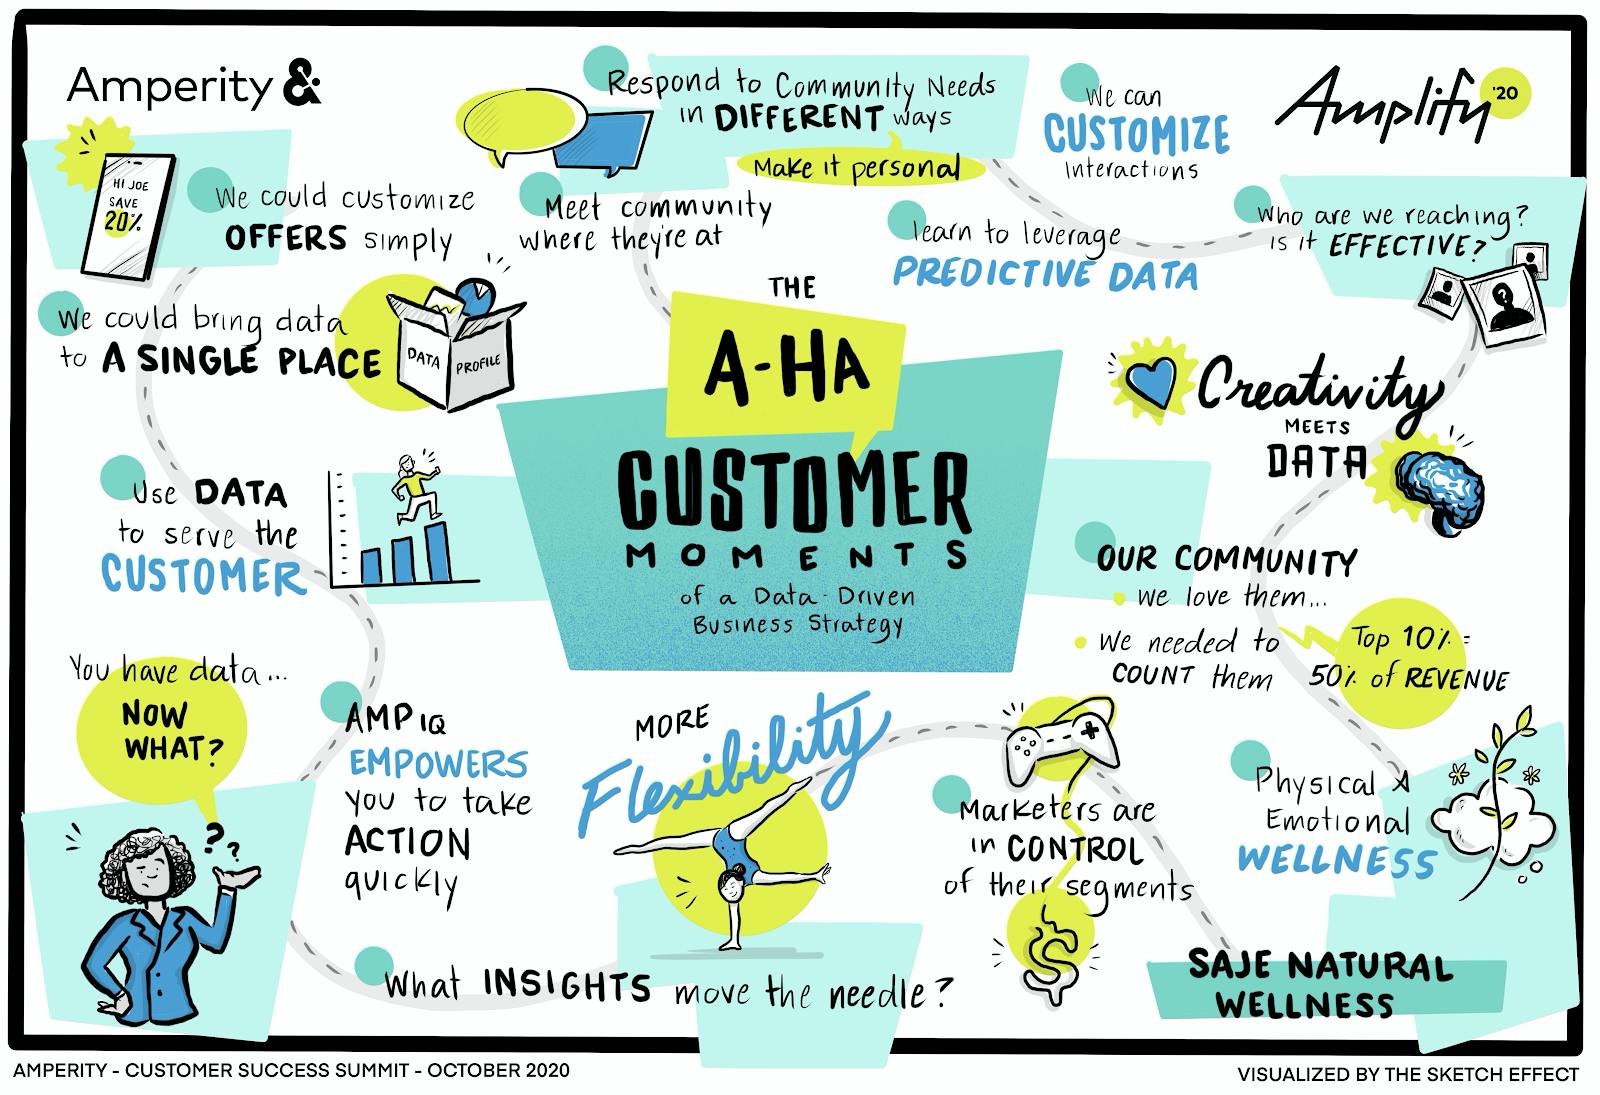 The A-HA Customer moments